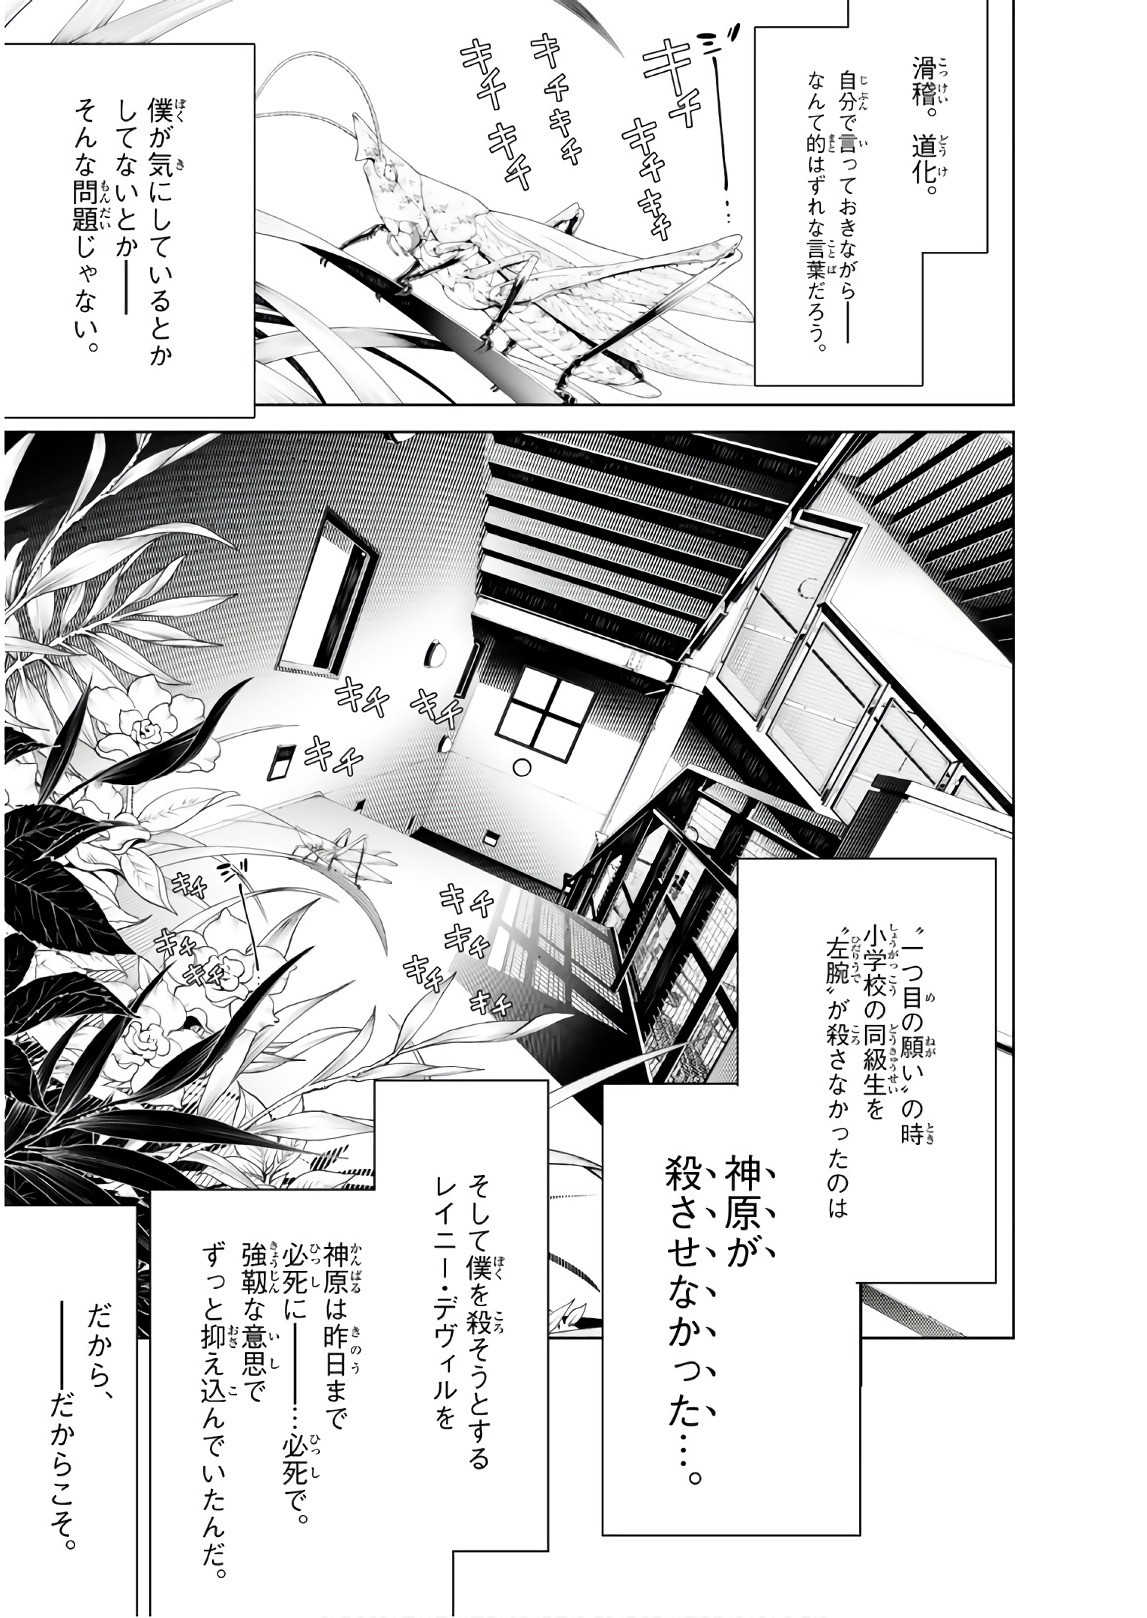 Bakemonogatari - Chapter 39 - Page 17